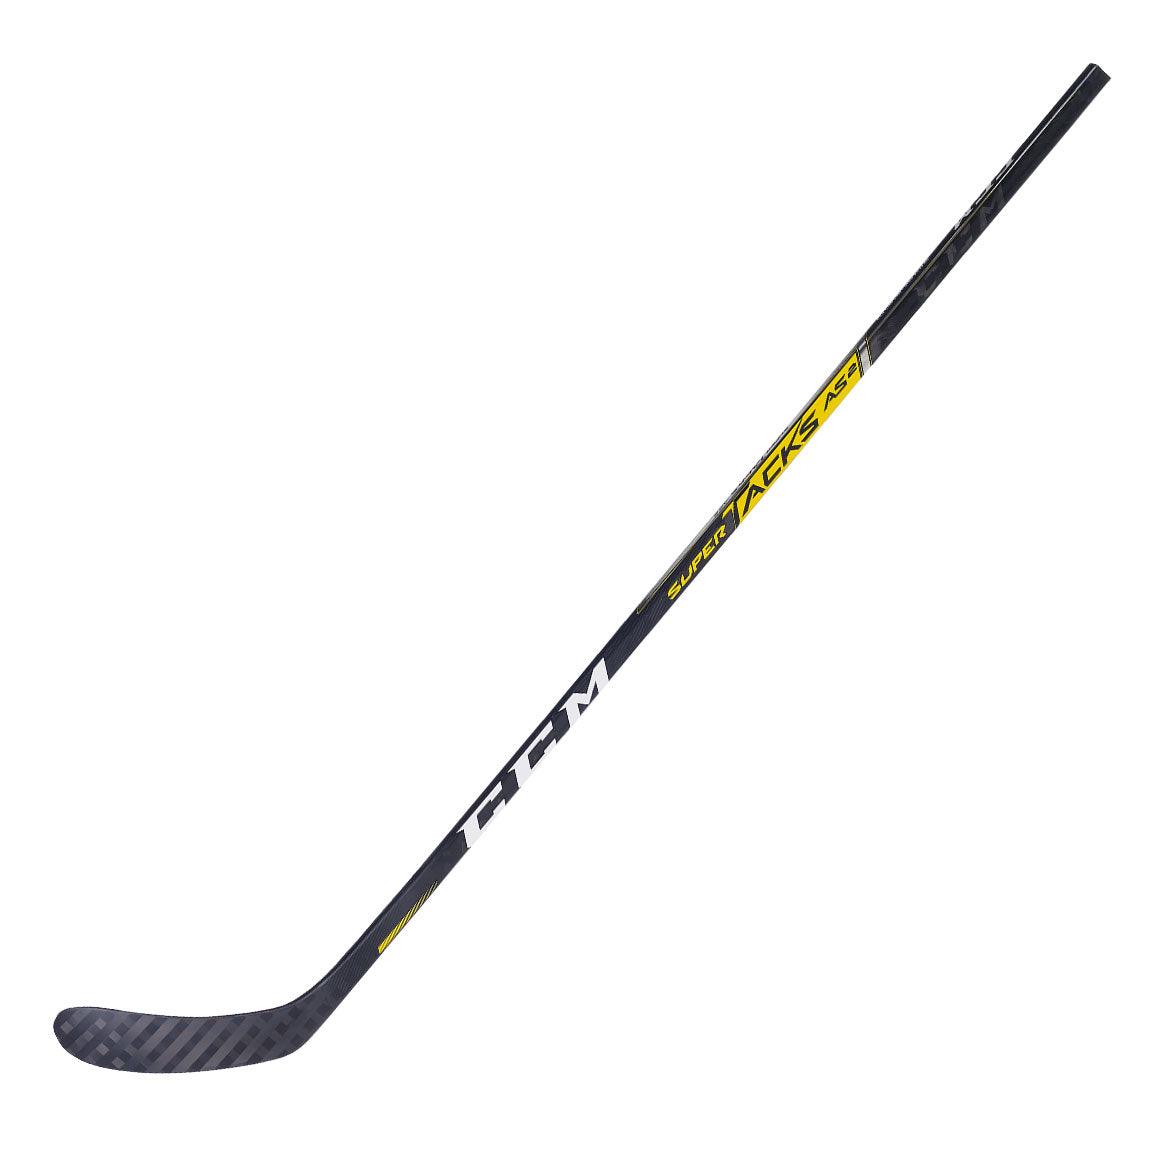 Super Tacks AS2 Hockey Stick - Junior - Sports Excellence